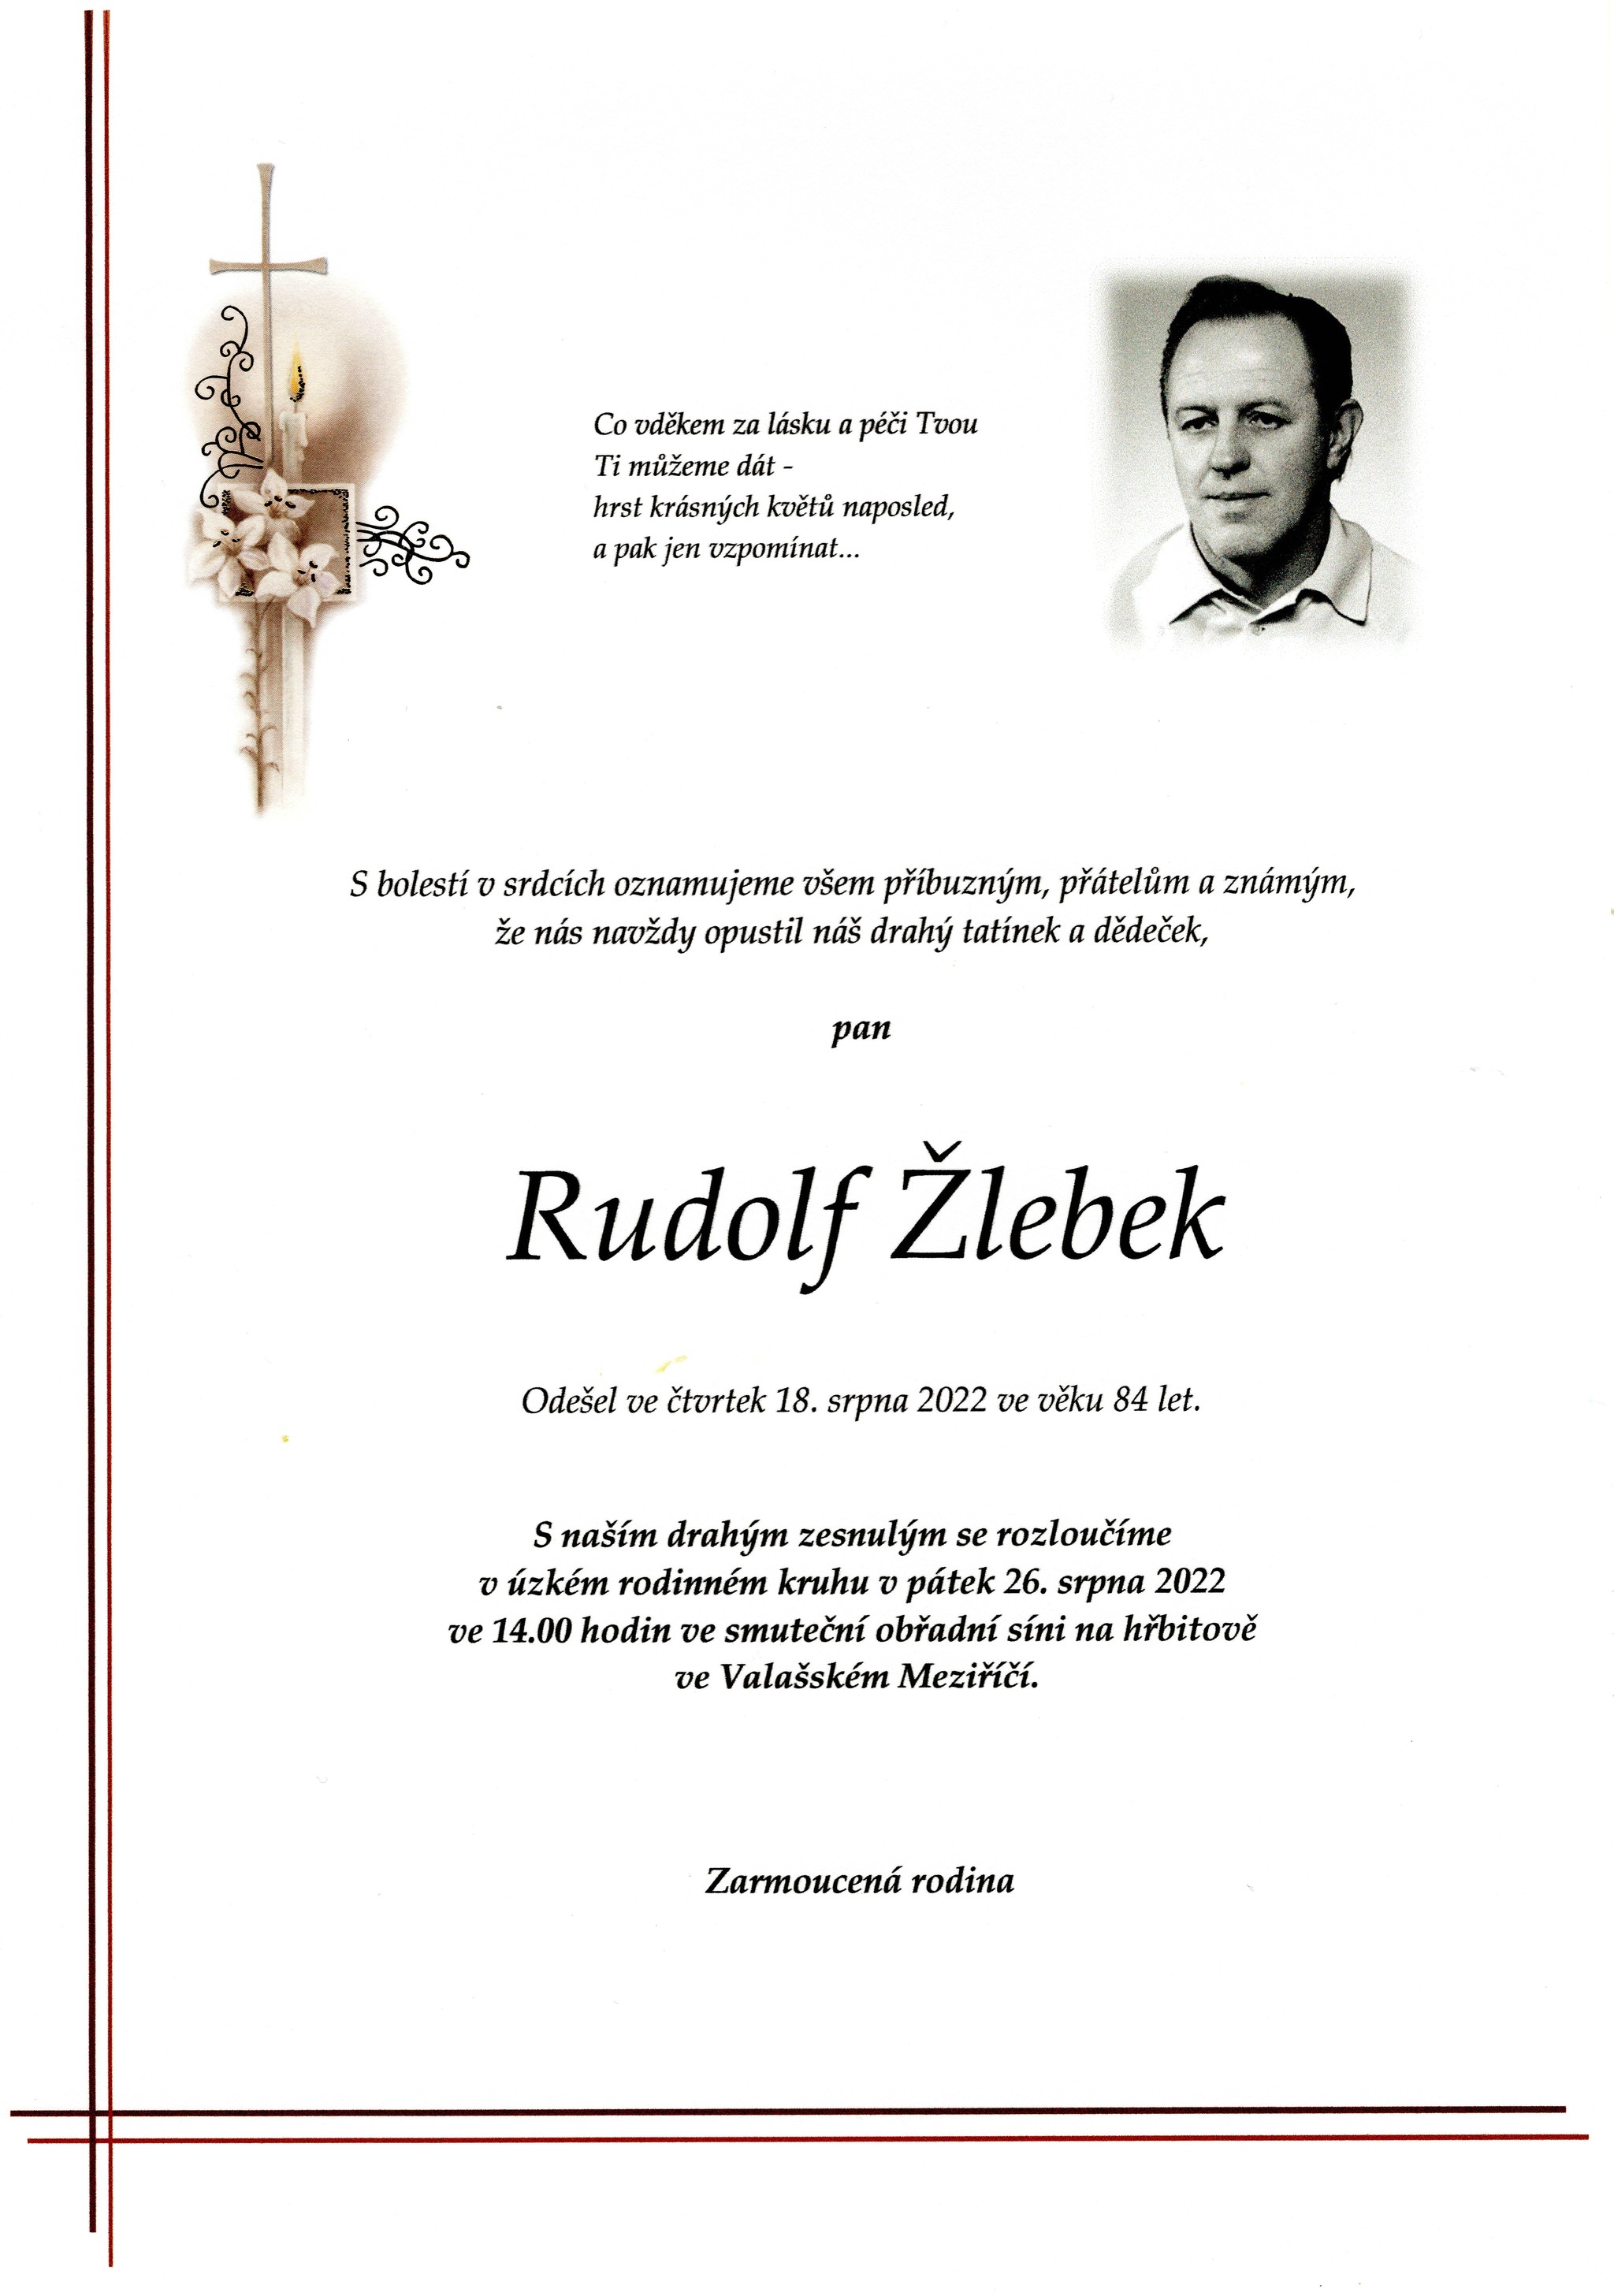 Rudolf Žlebek